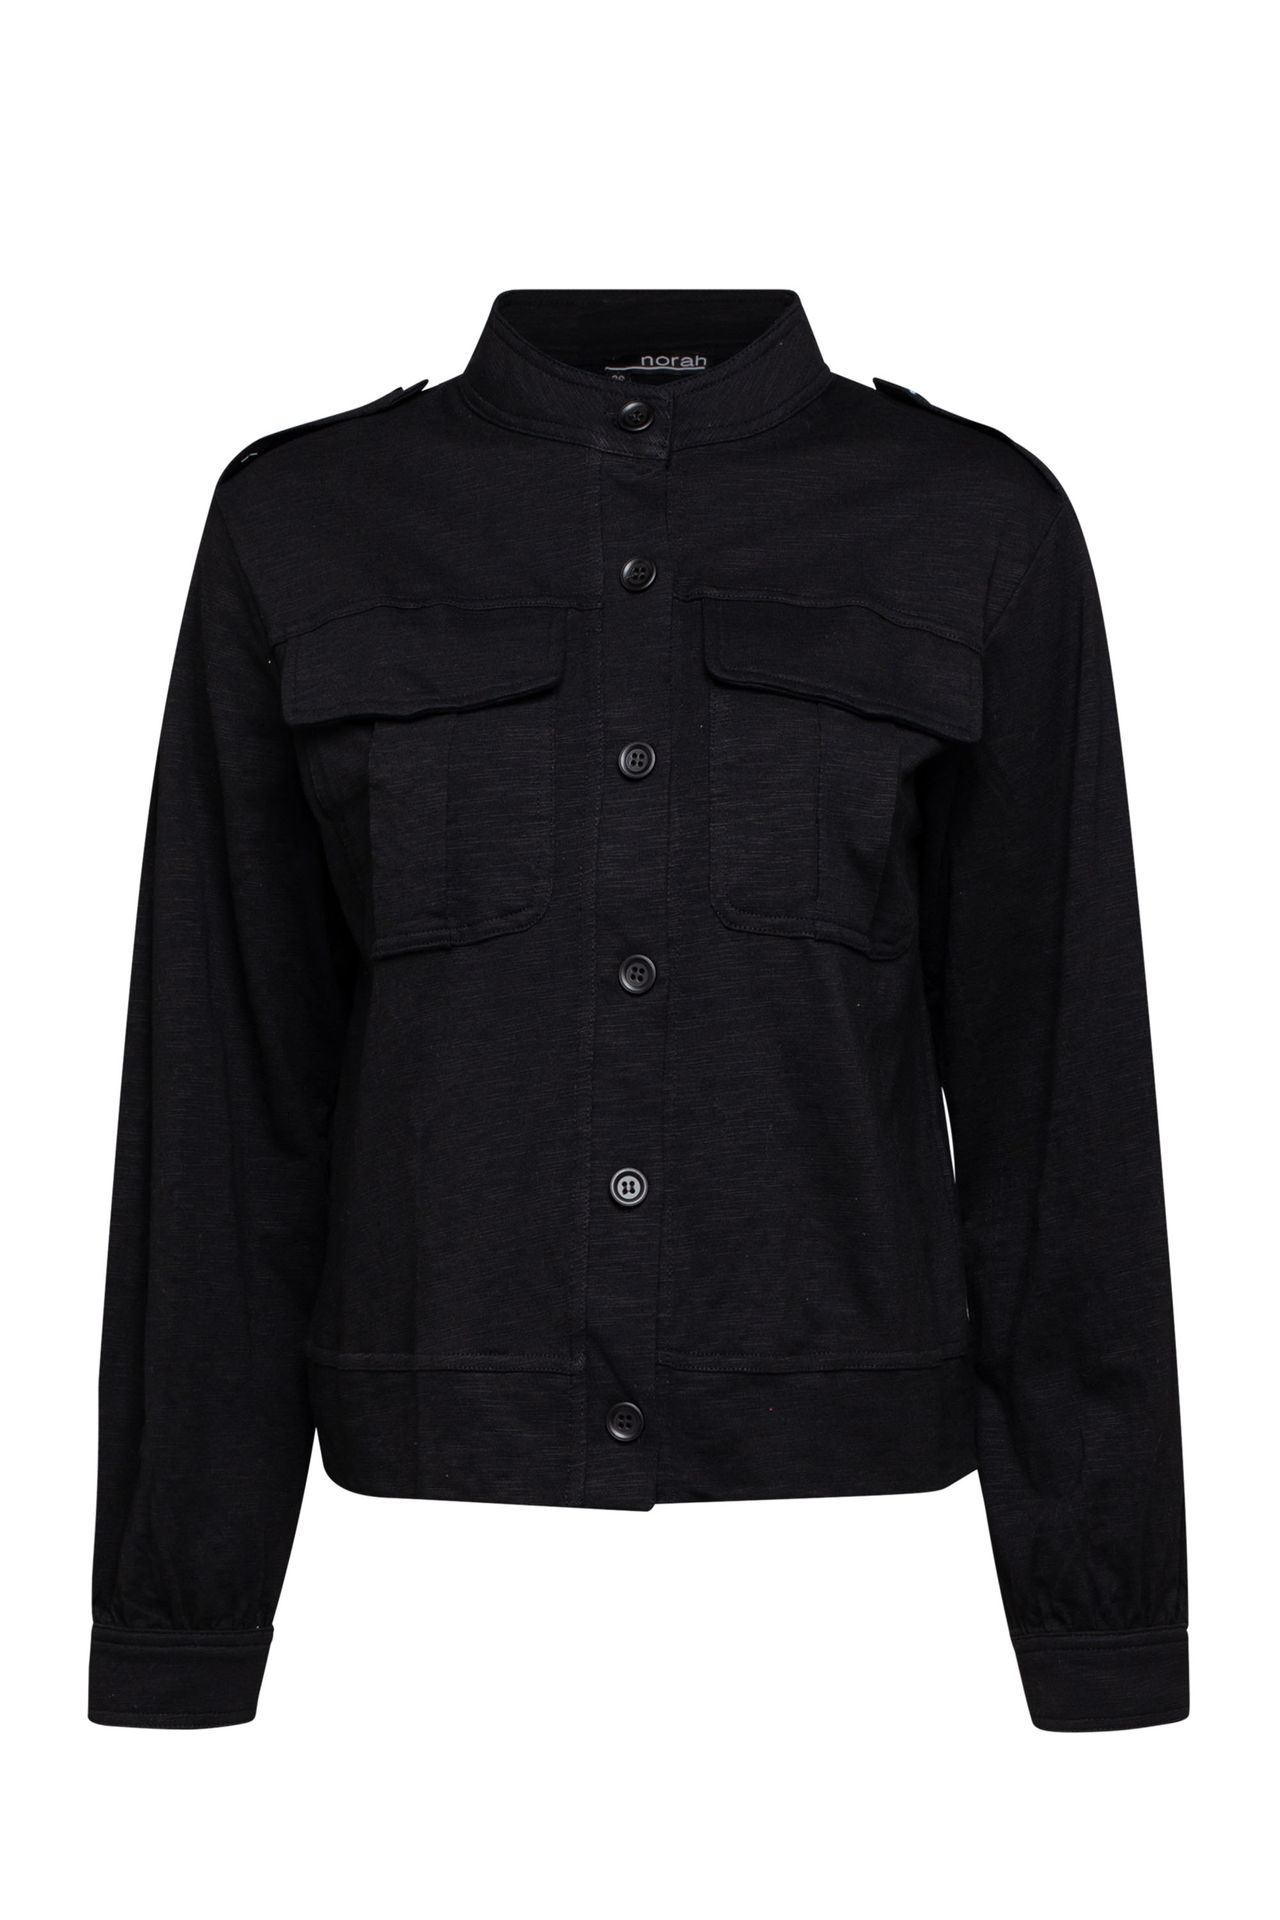  Jacket zwart black 212267-001